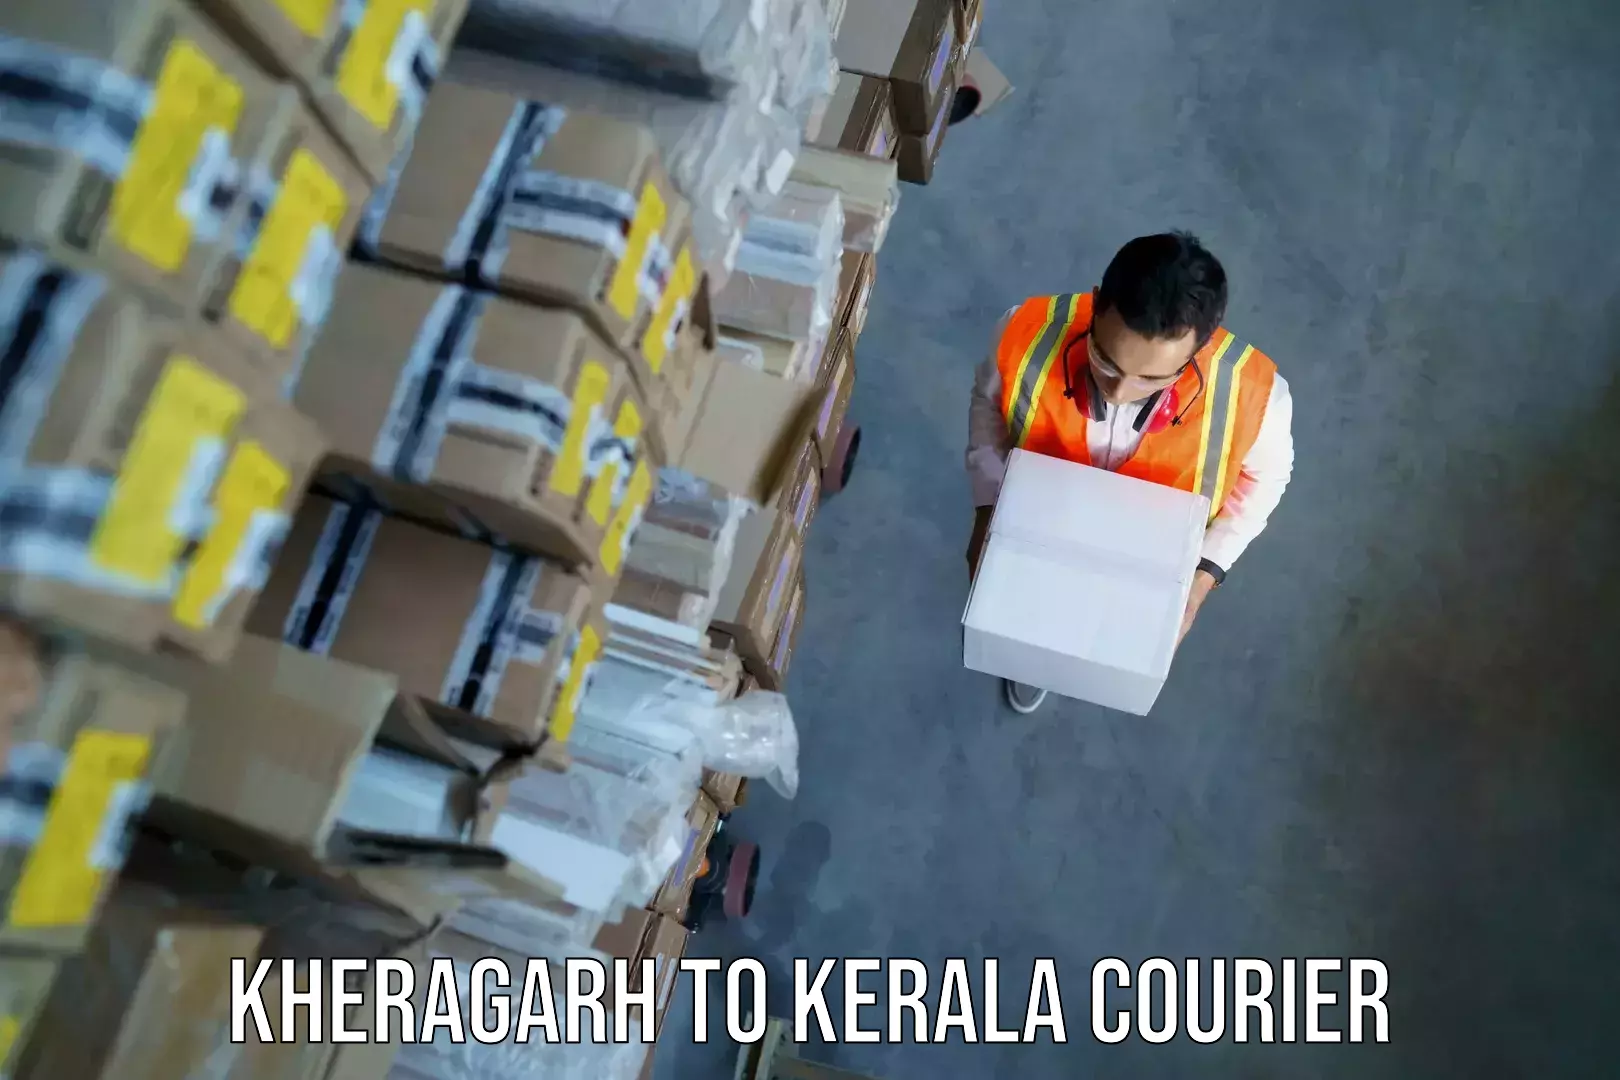 Baggage shipping experts Kheragarh to Kerala